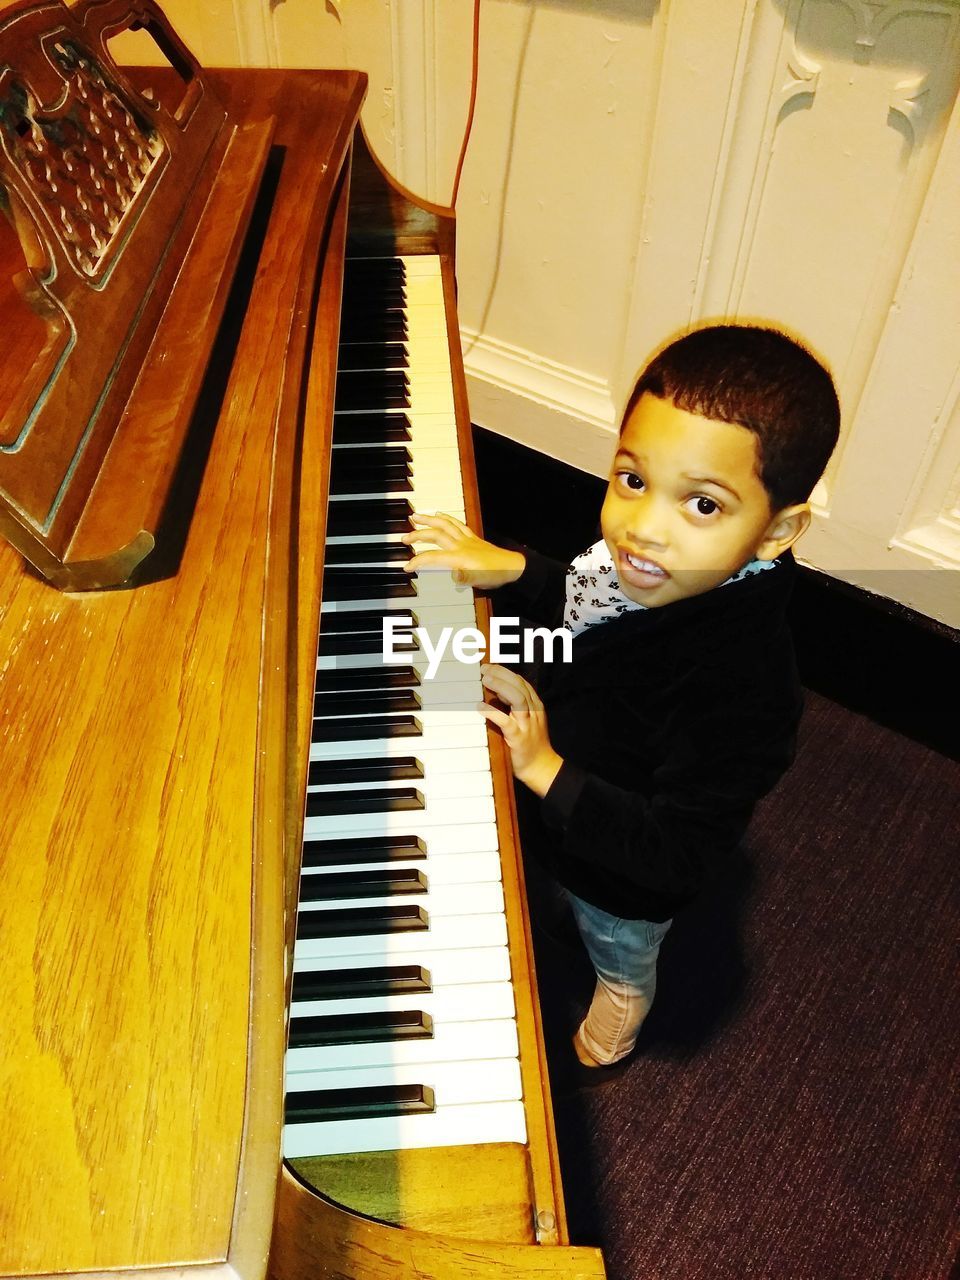 BOY PLAYING PIANO